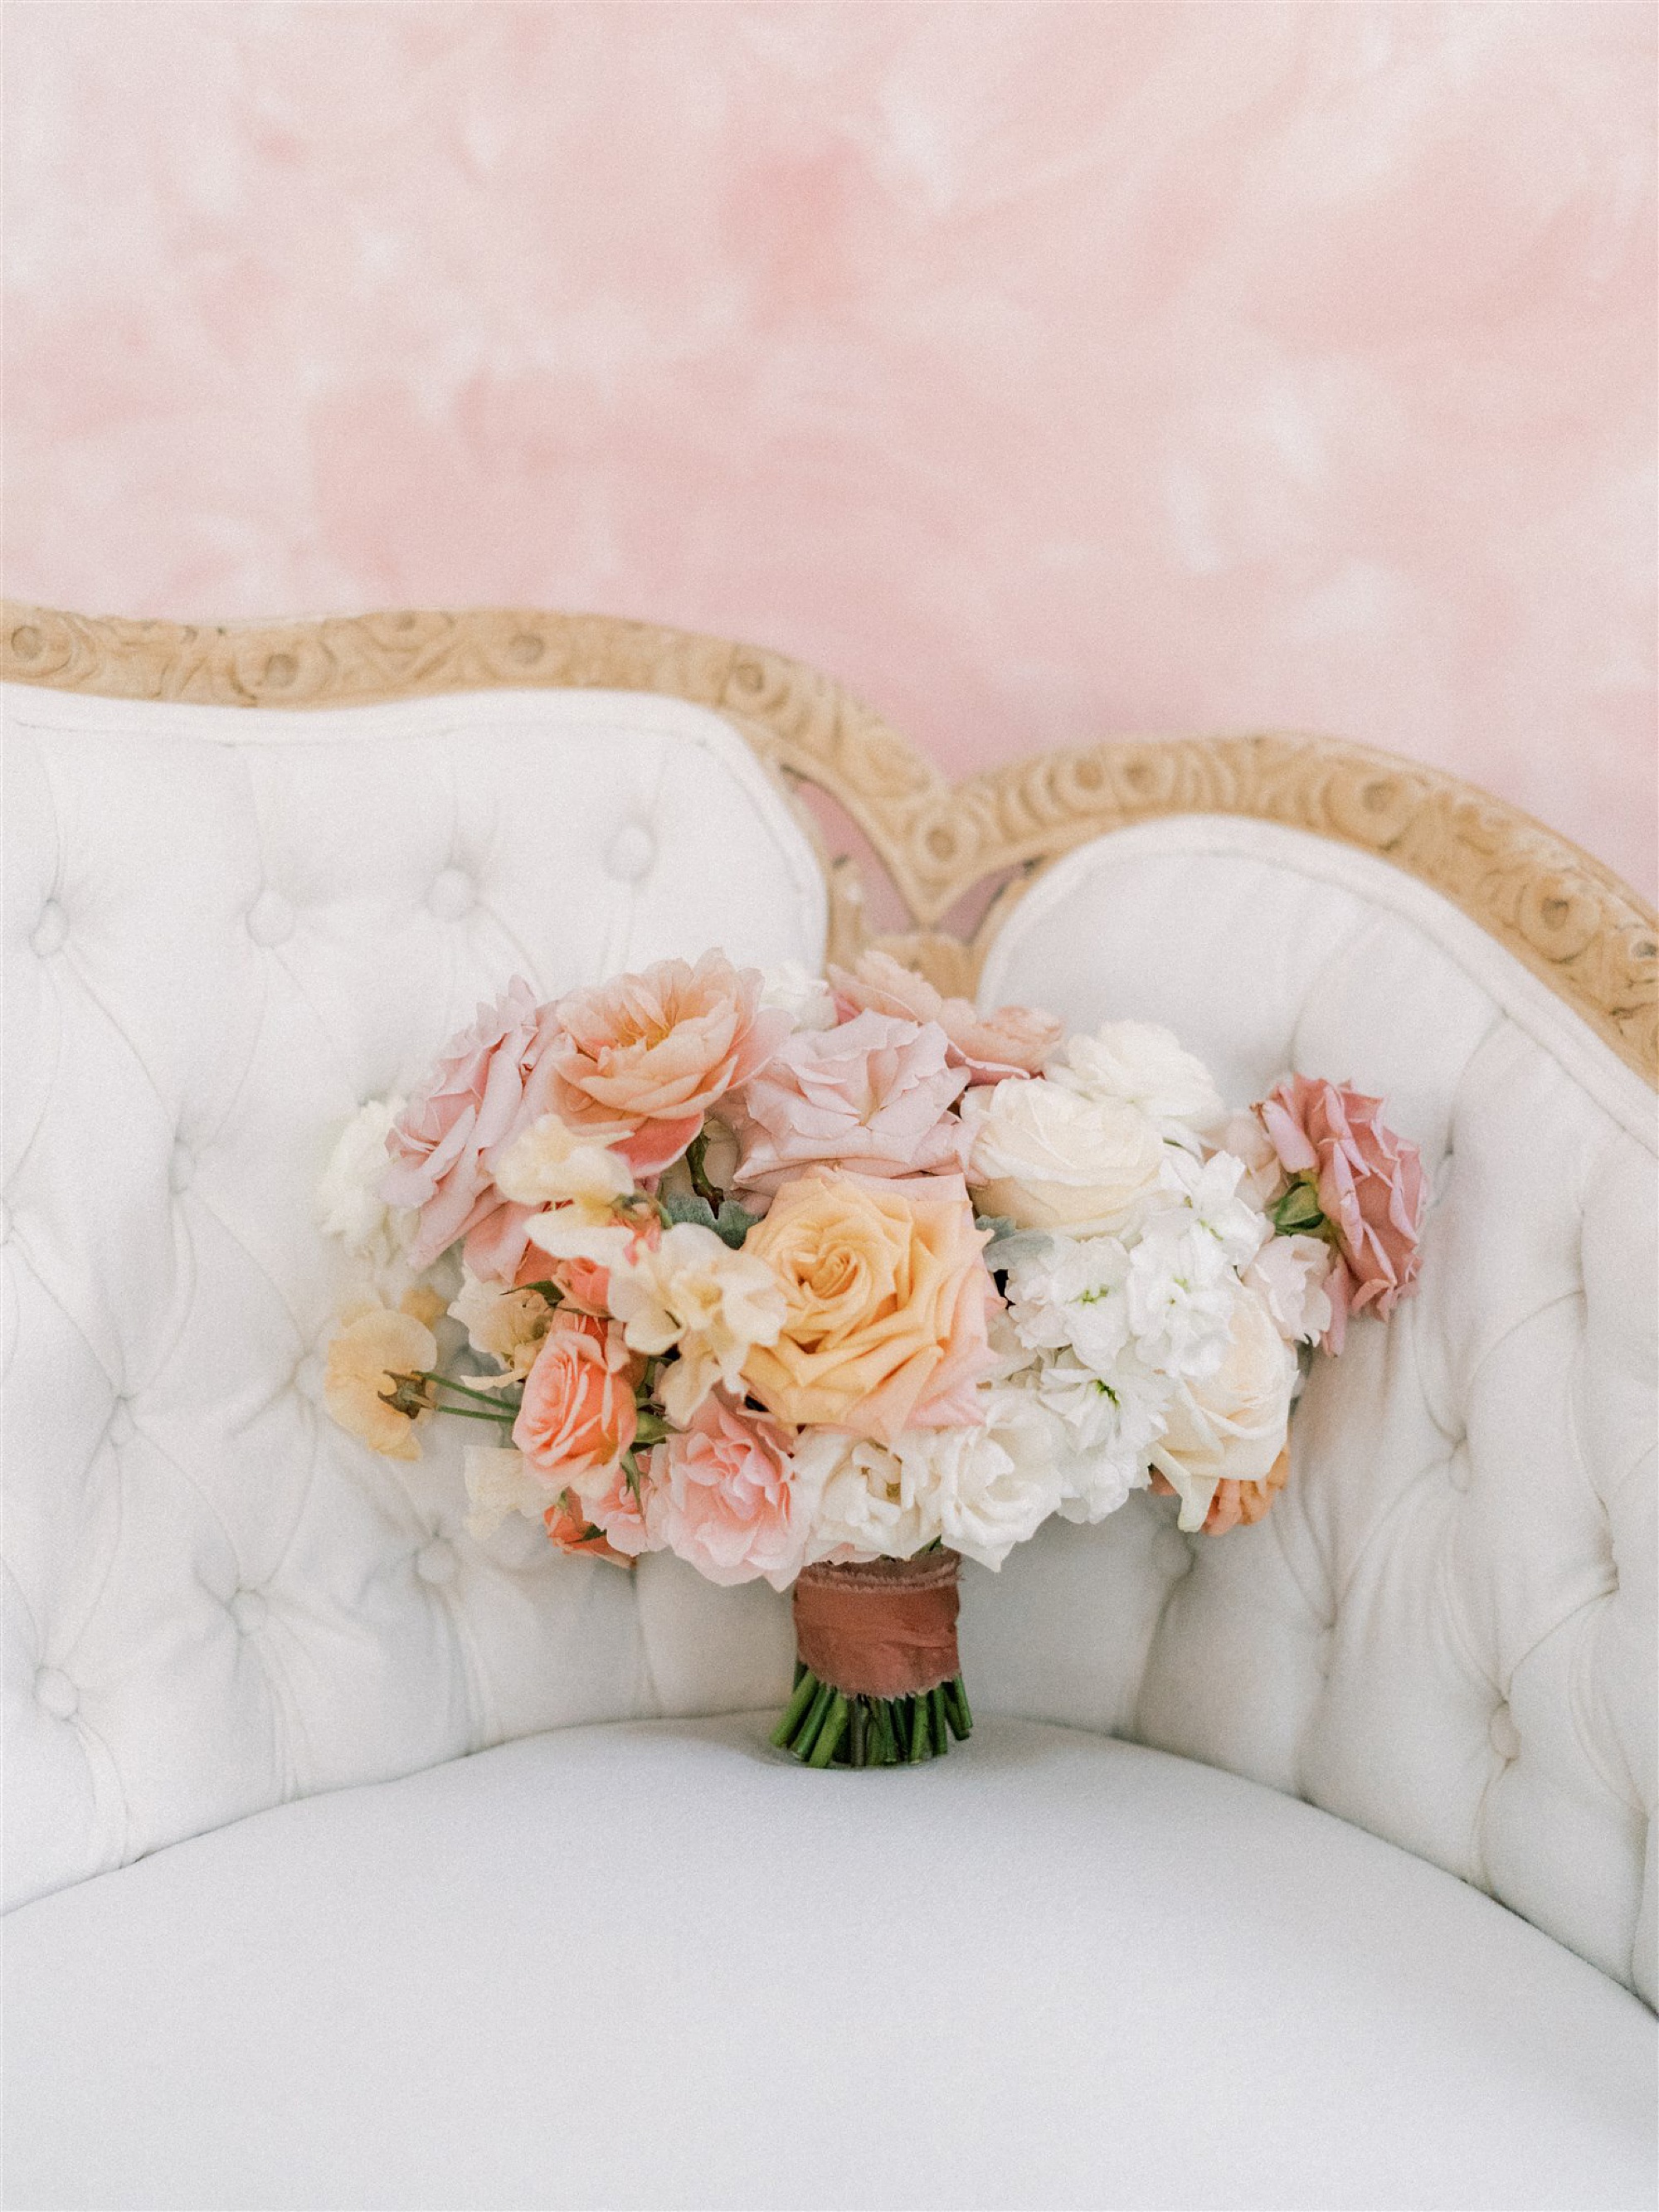 bride's bouquet for summer microwedding with pastel color scheme